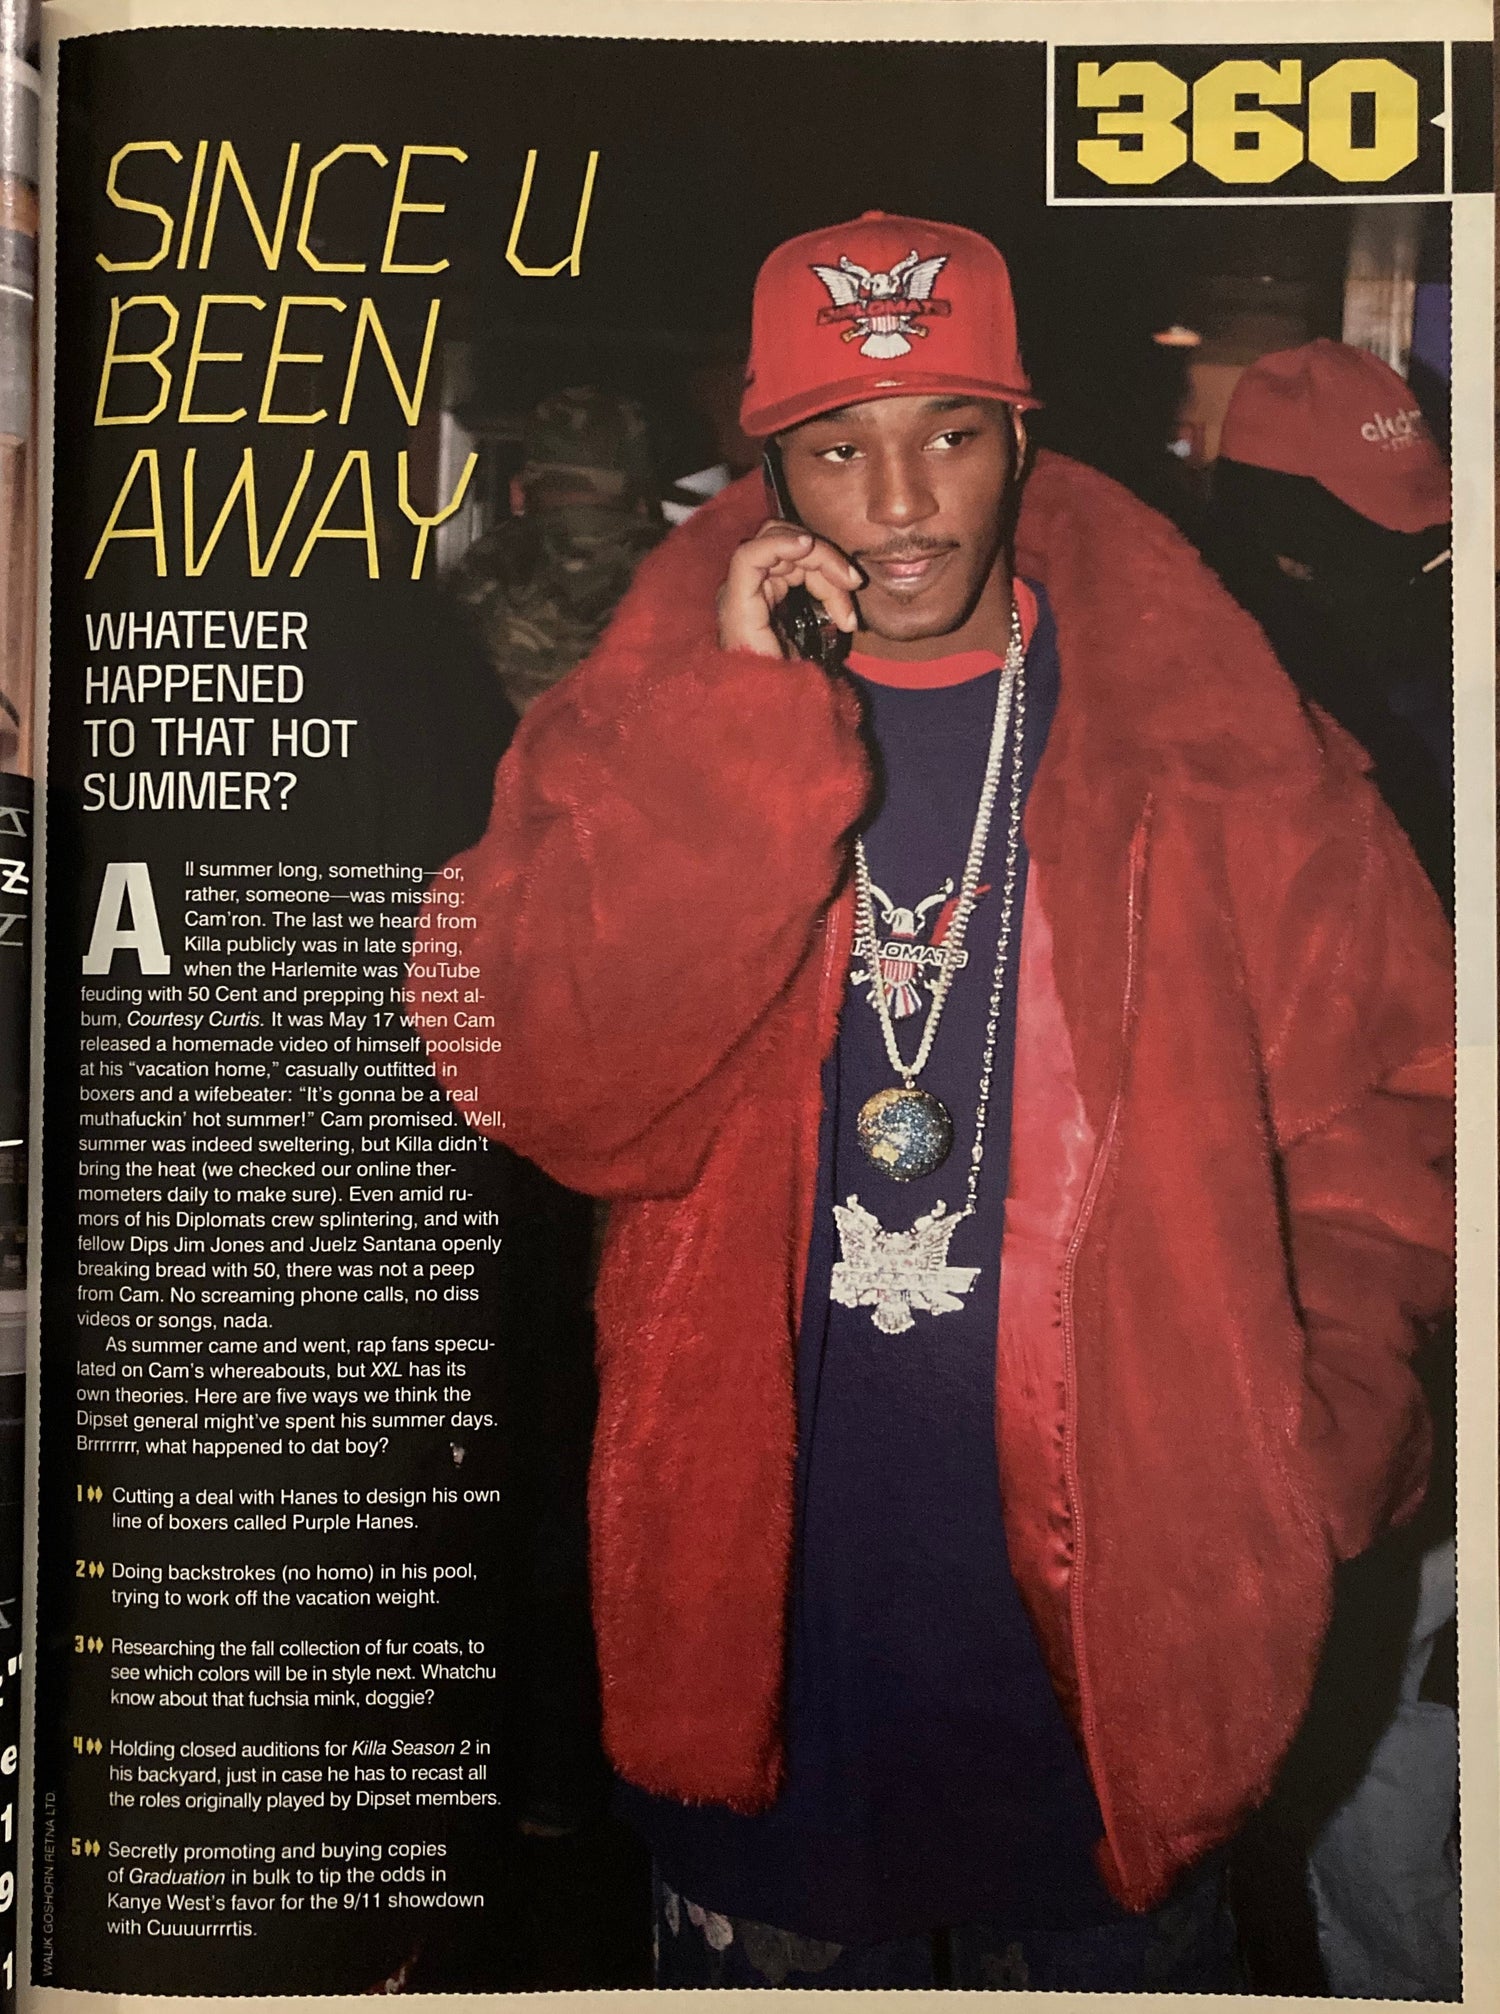 XXL Magazine December 2007 Jay-Z - MoSneaks Shop Online